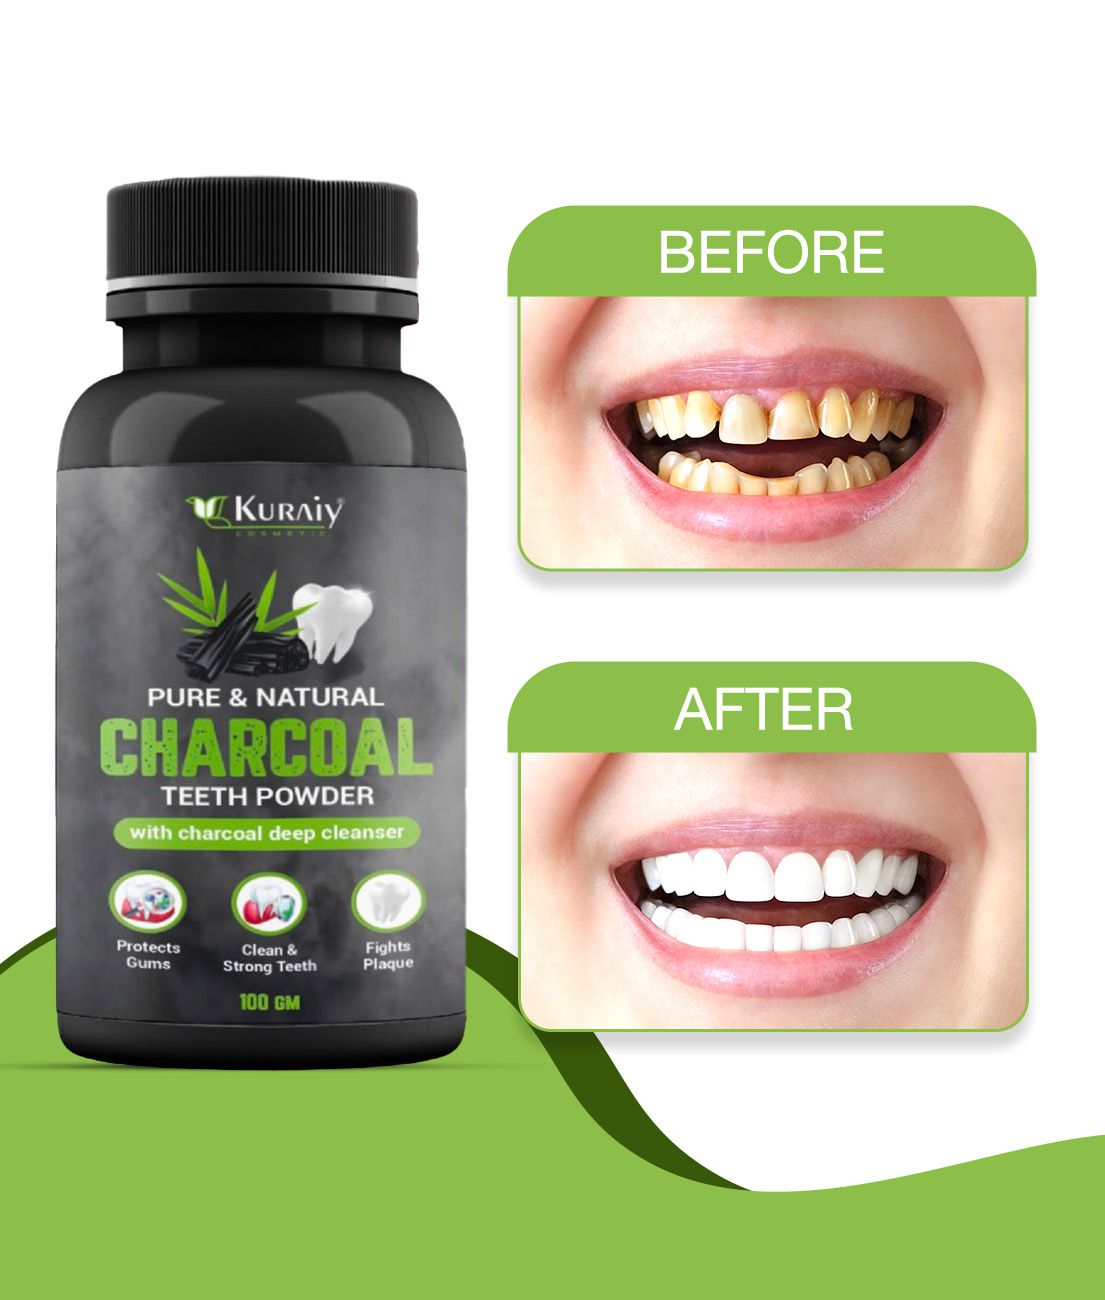     			Kuraiy Safe Teeth Whitening Powder Tooth Brightening Productsteeth Cleaning Toothpaste